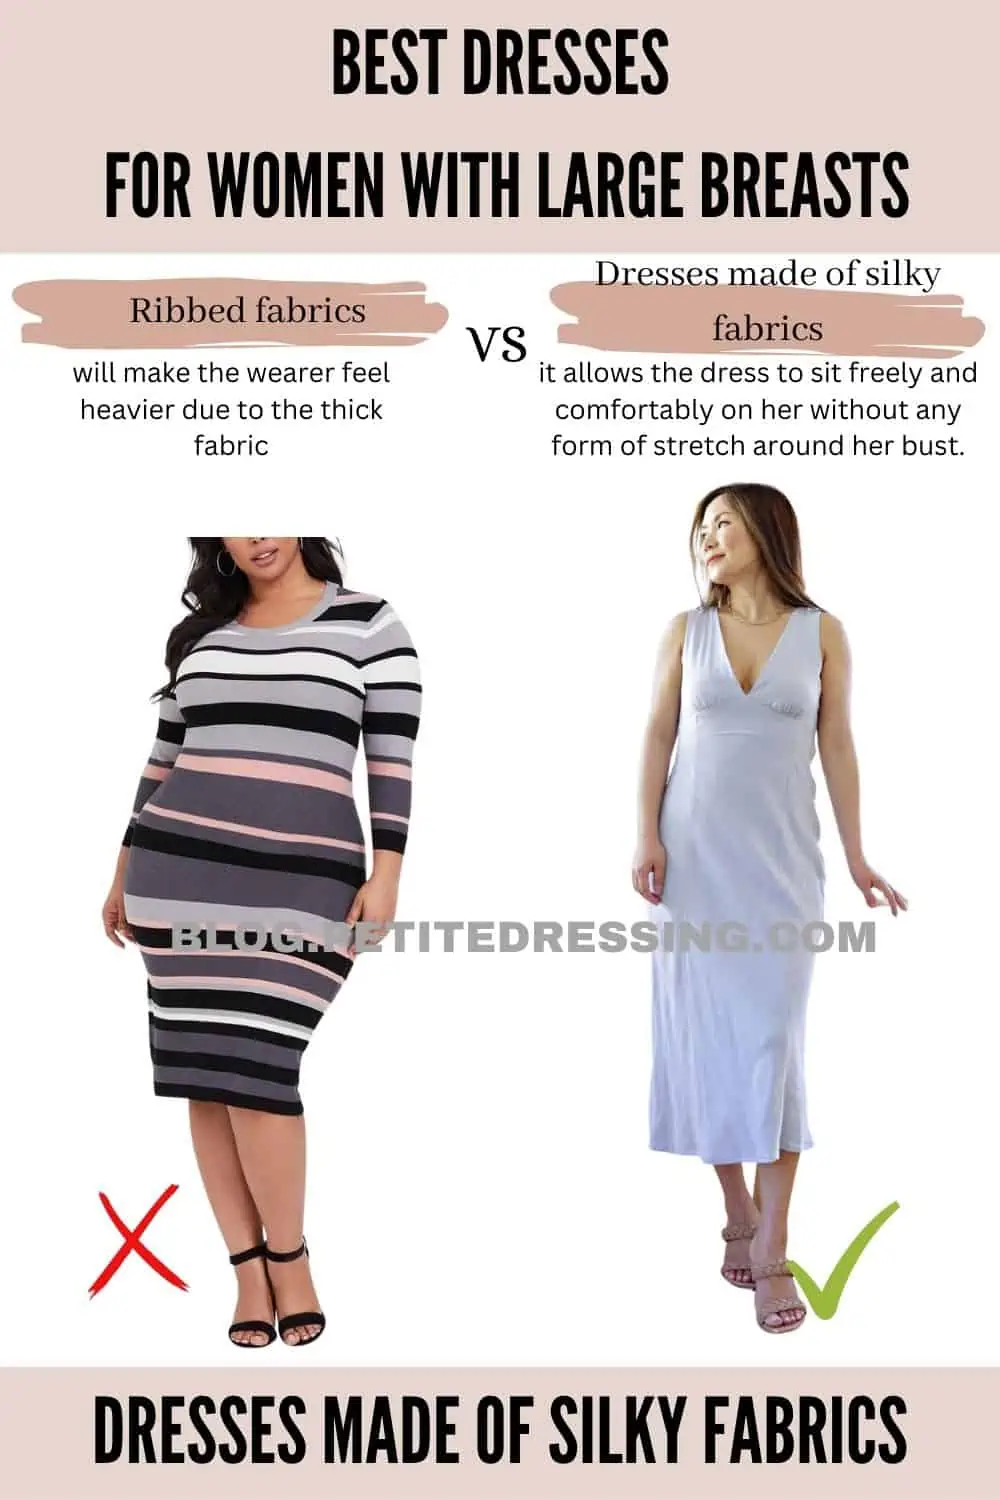 Summer Dresses for a Fuller Bust // Large Breast Dress Tips +